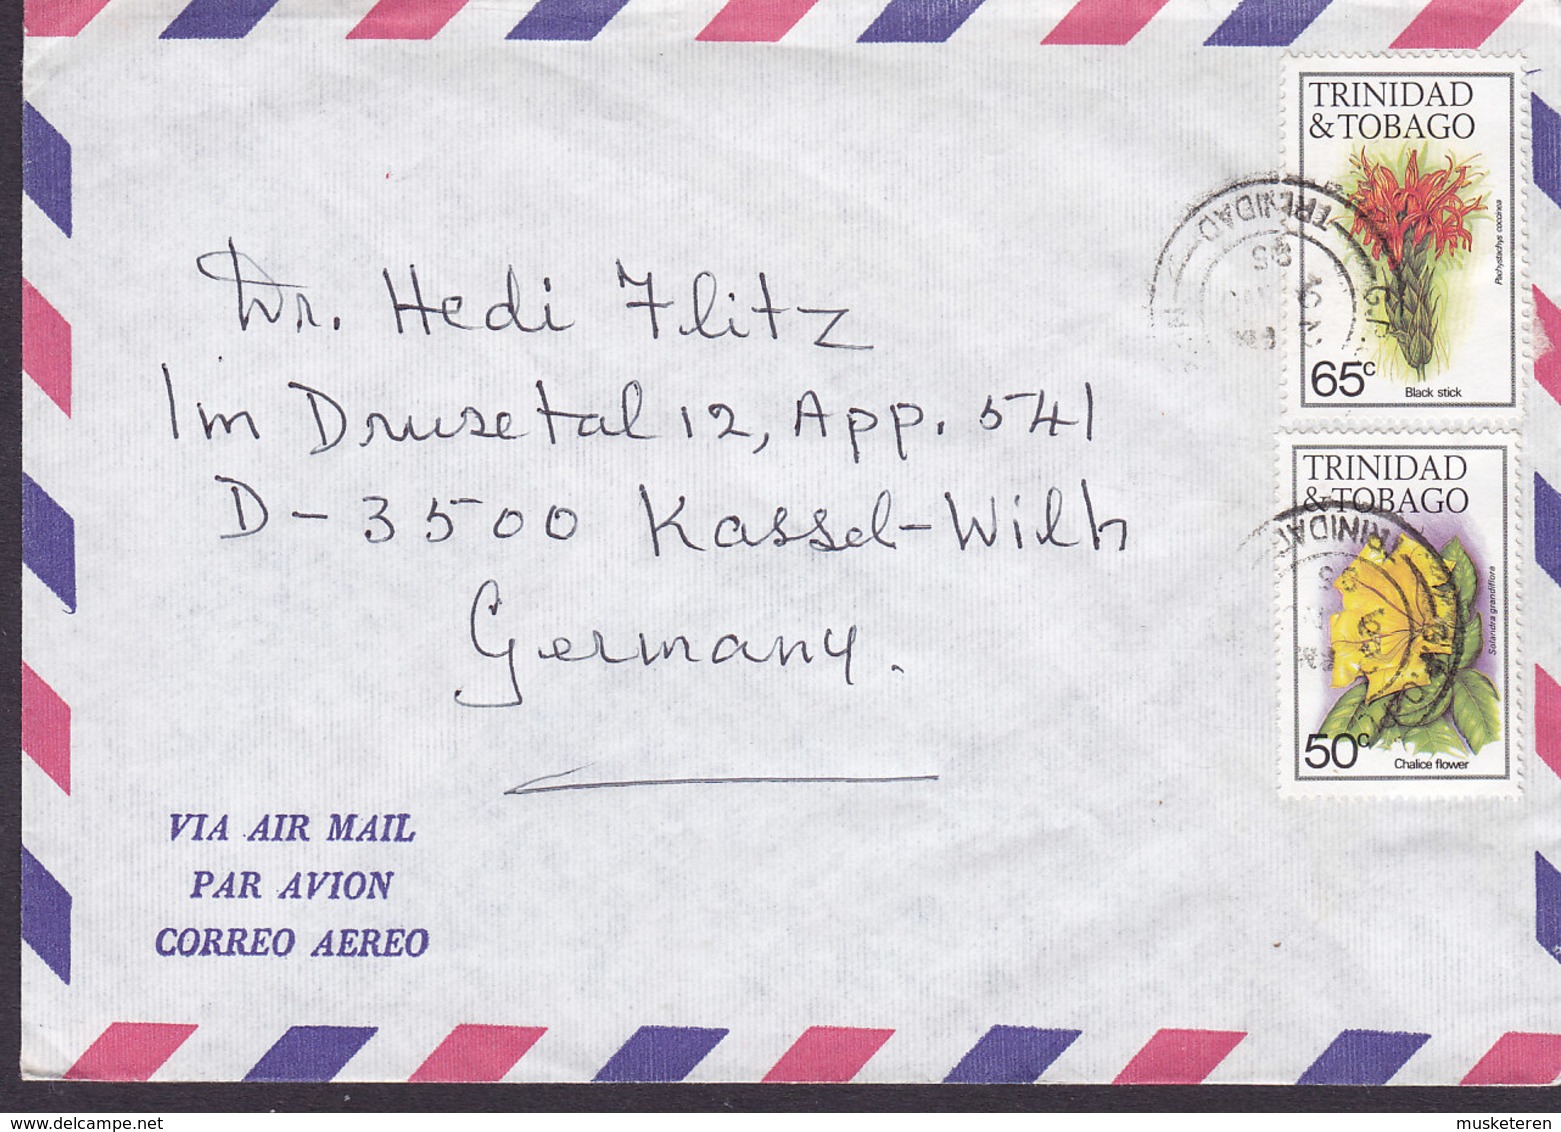 Trinidad & Tobago Air Mail 1985 Cover Brief KASSEL-Wilh. Germany 50 C. & 65 C. Flower Blume Stamps - Trinidad & Tobago (1962-...)